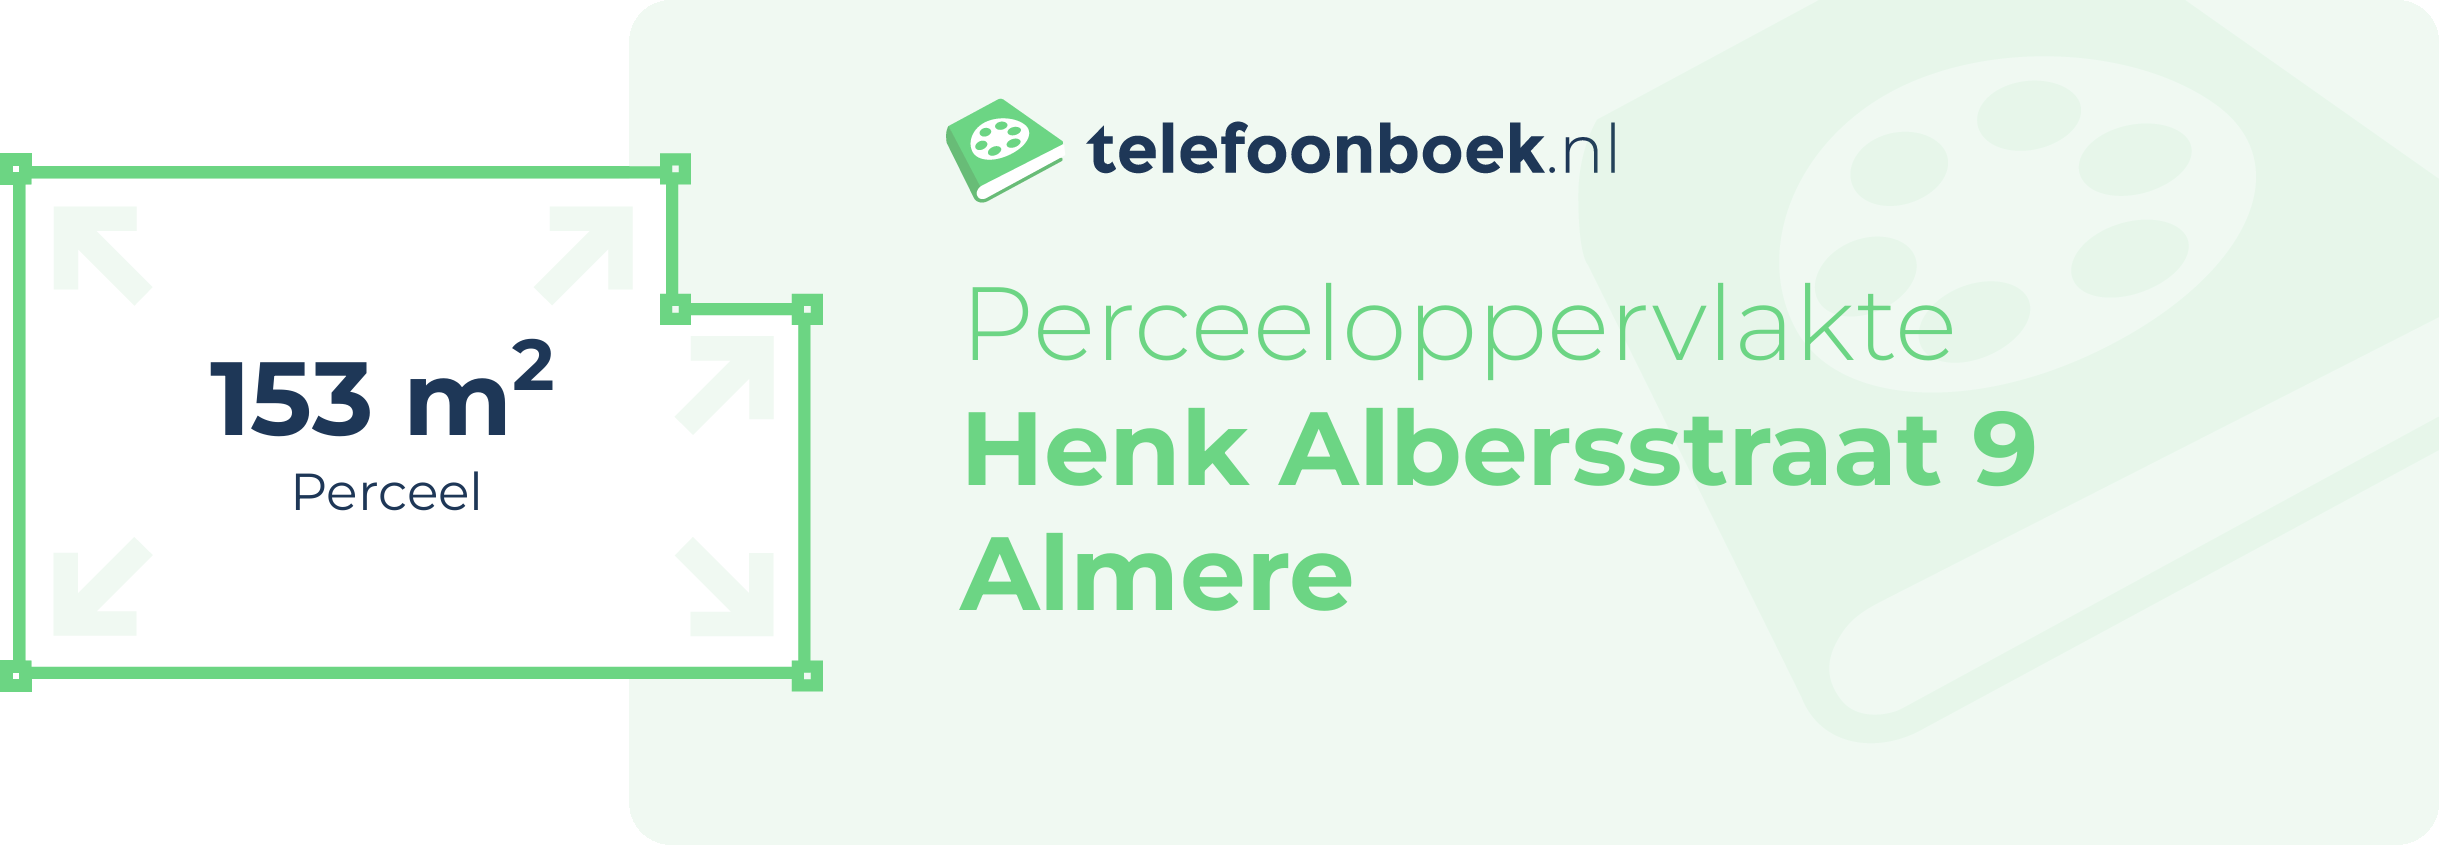 Perceeloppervlakte Henk Albersstraat 9 Almere